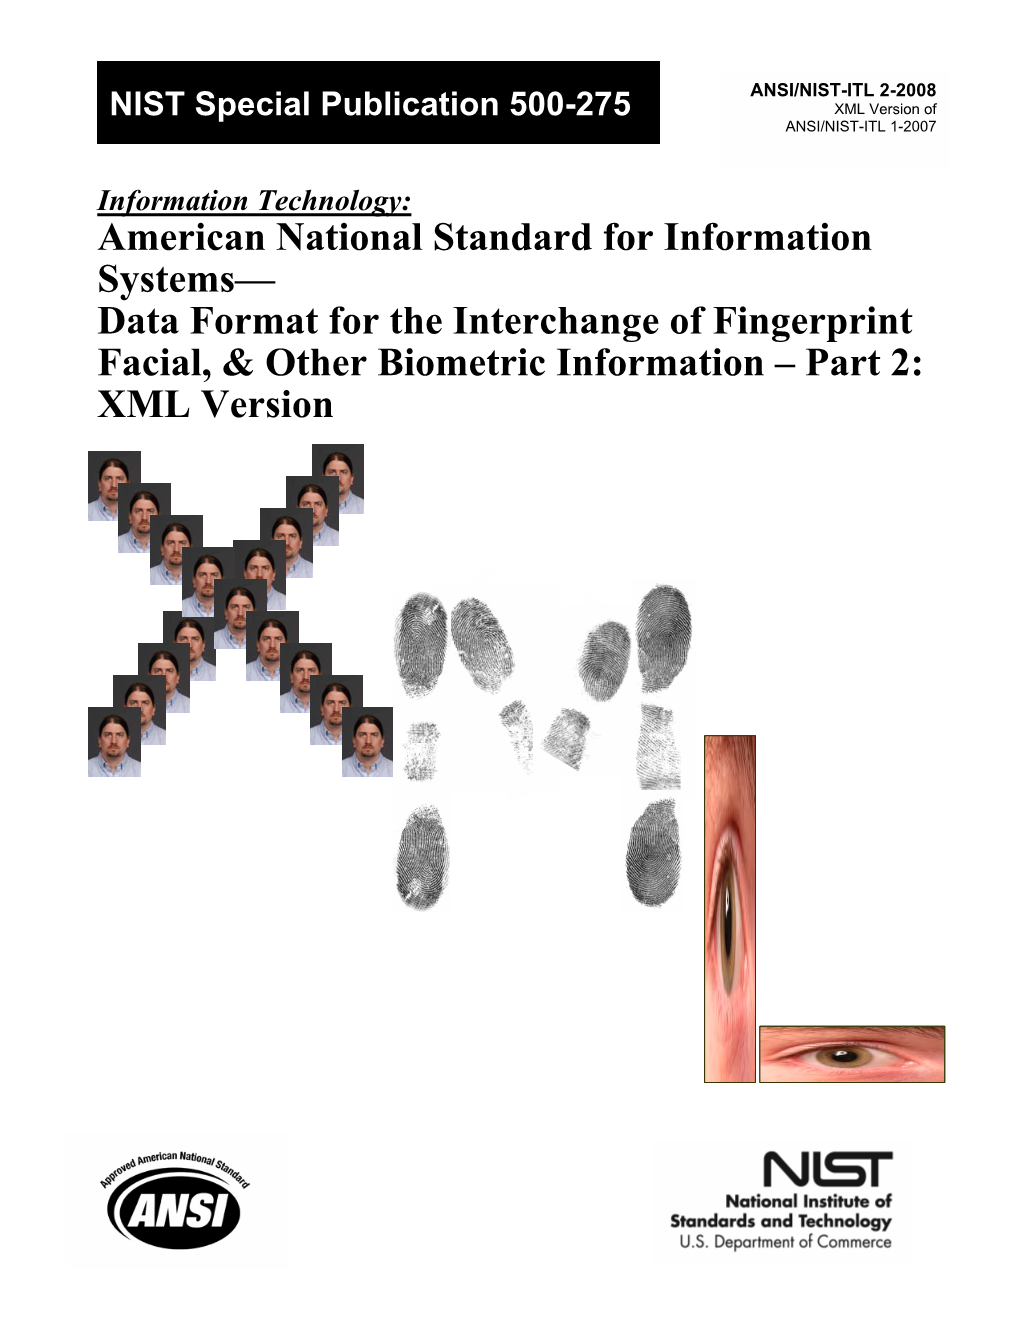 Data Format for the Interchange of Fingerprint Facial, & Other Biometr